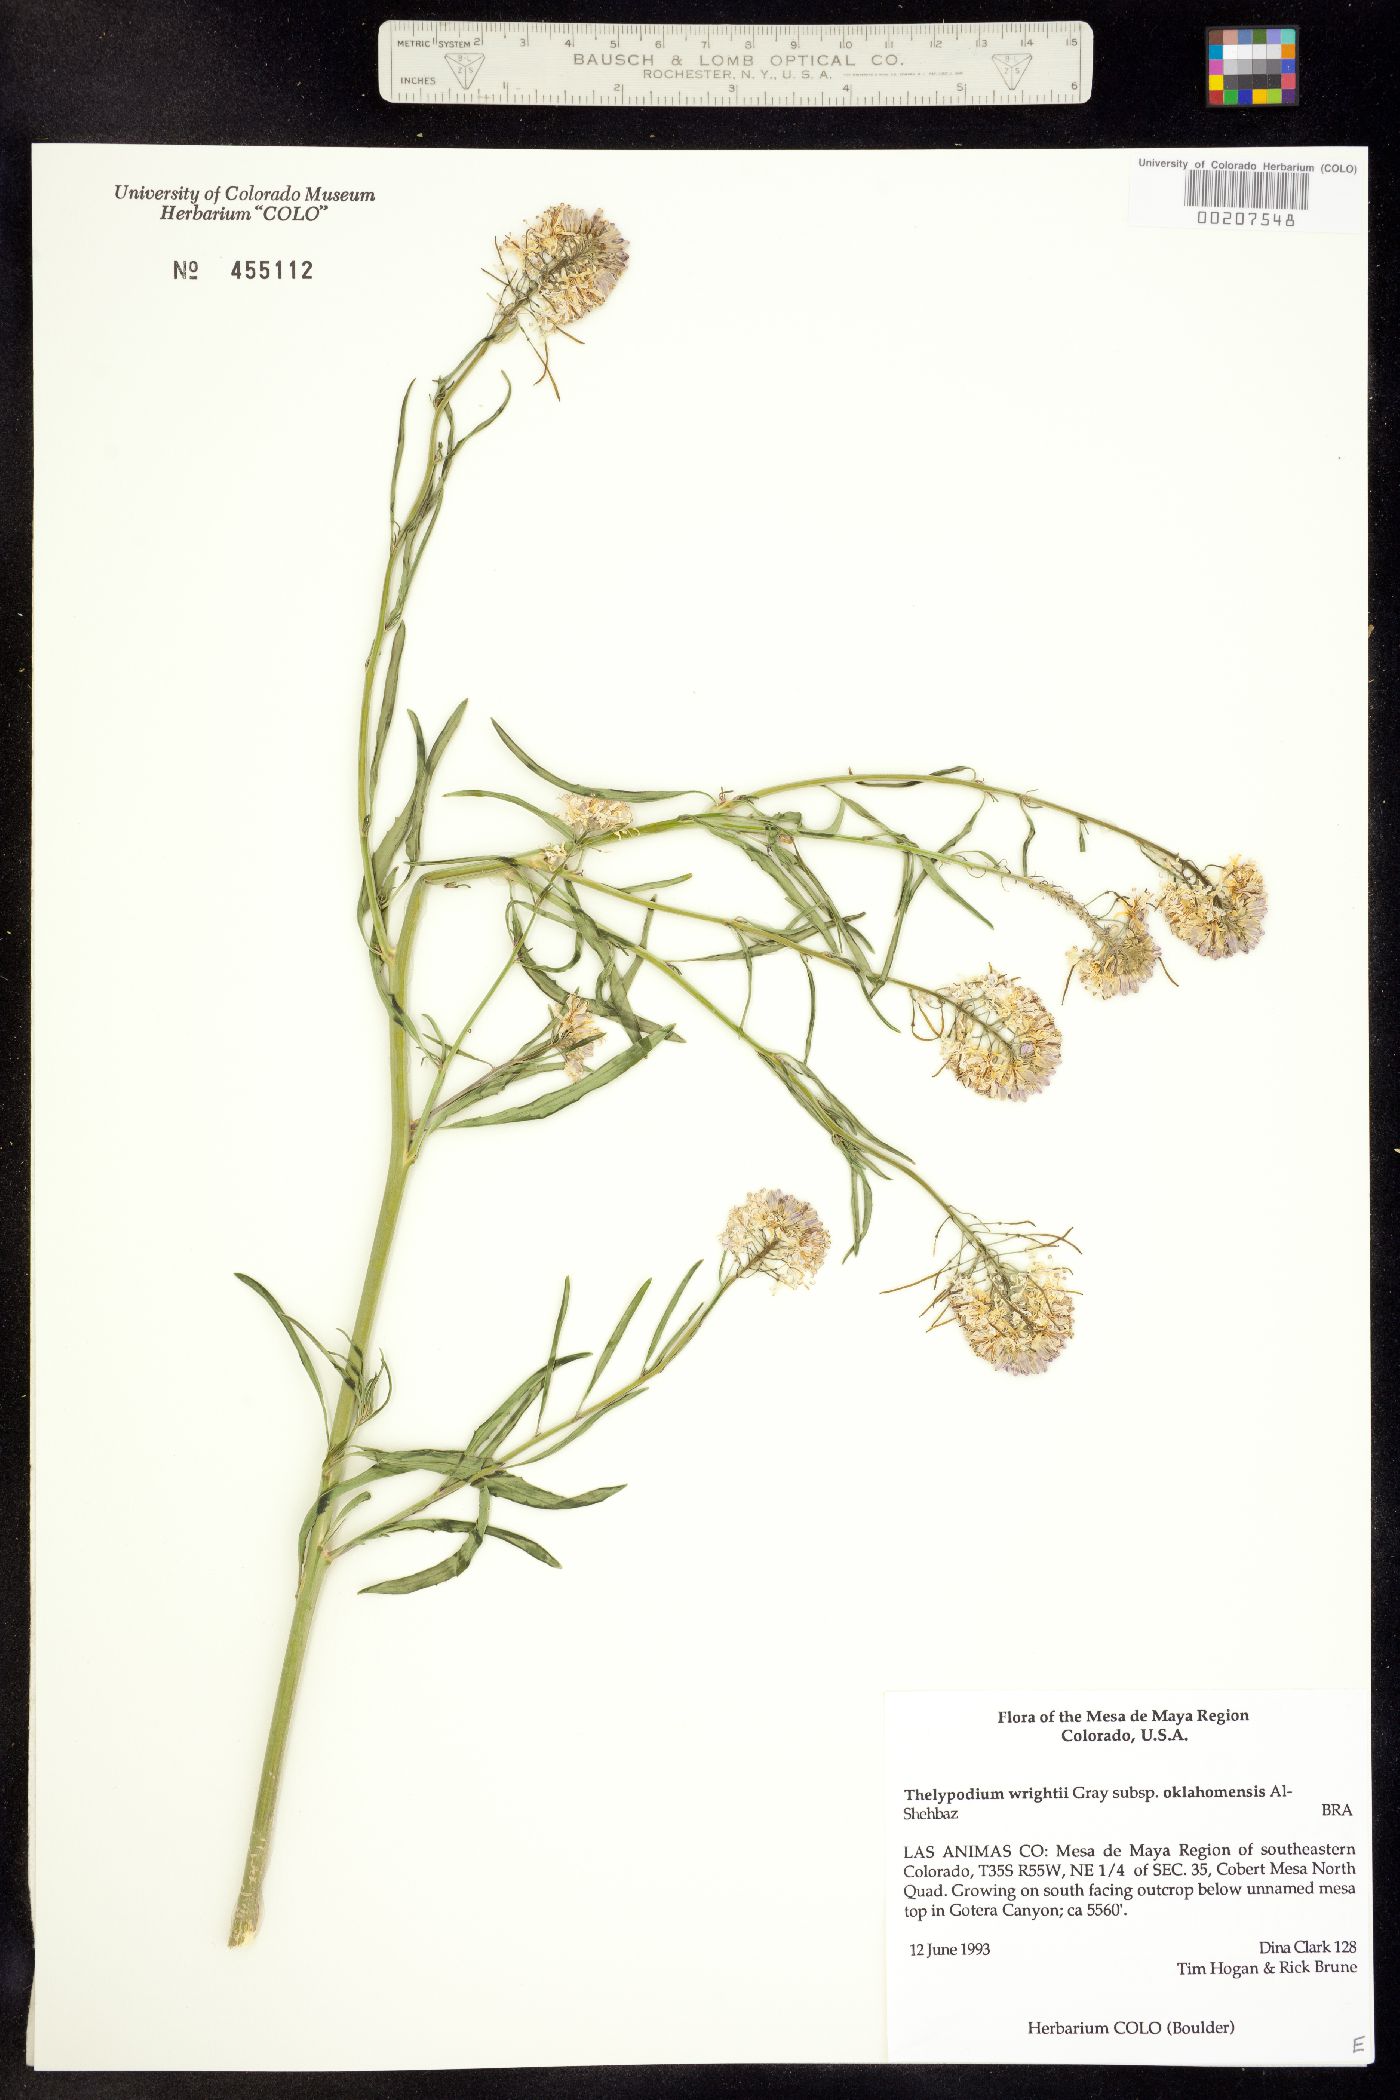 Thelypodium wrightii ssp. oklahomensis image